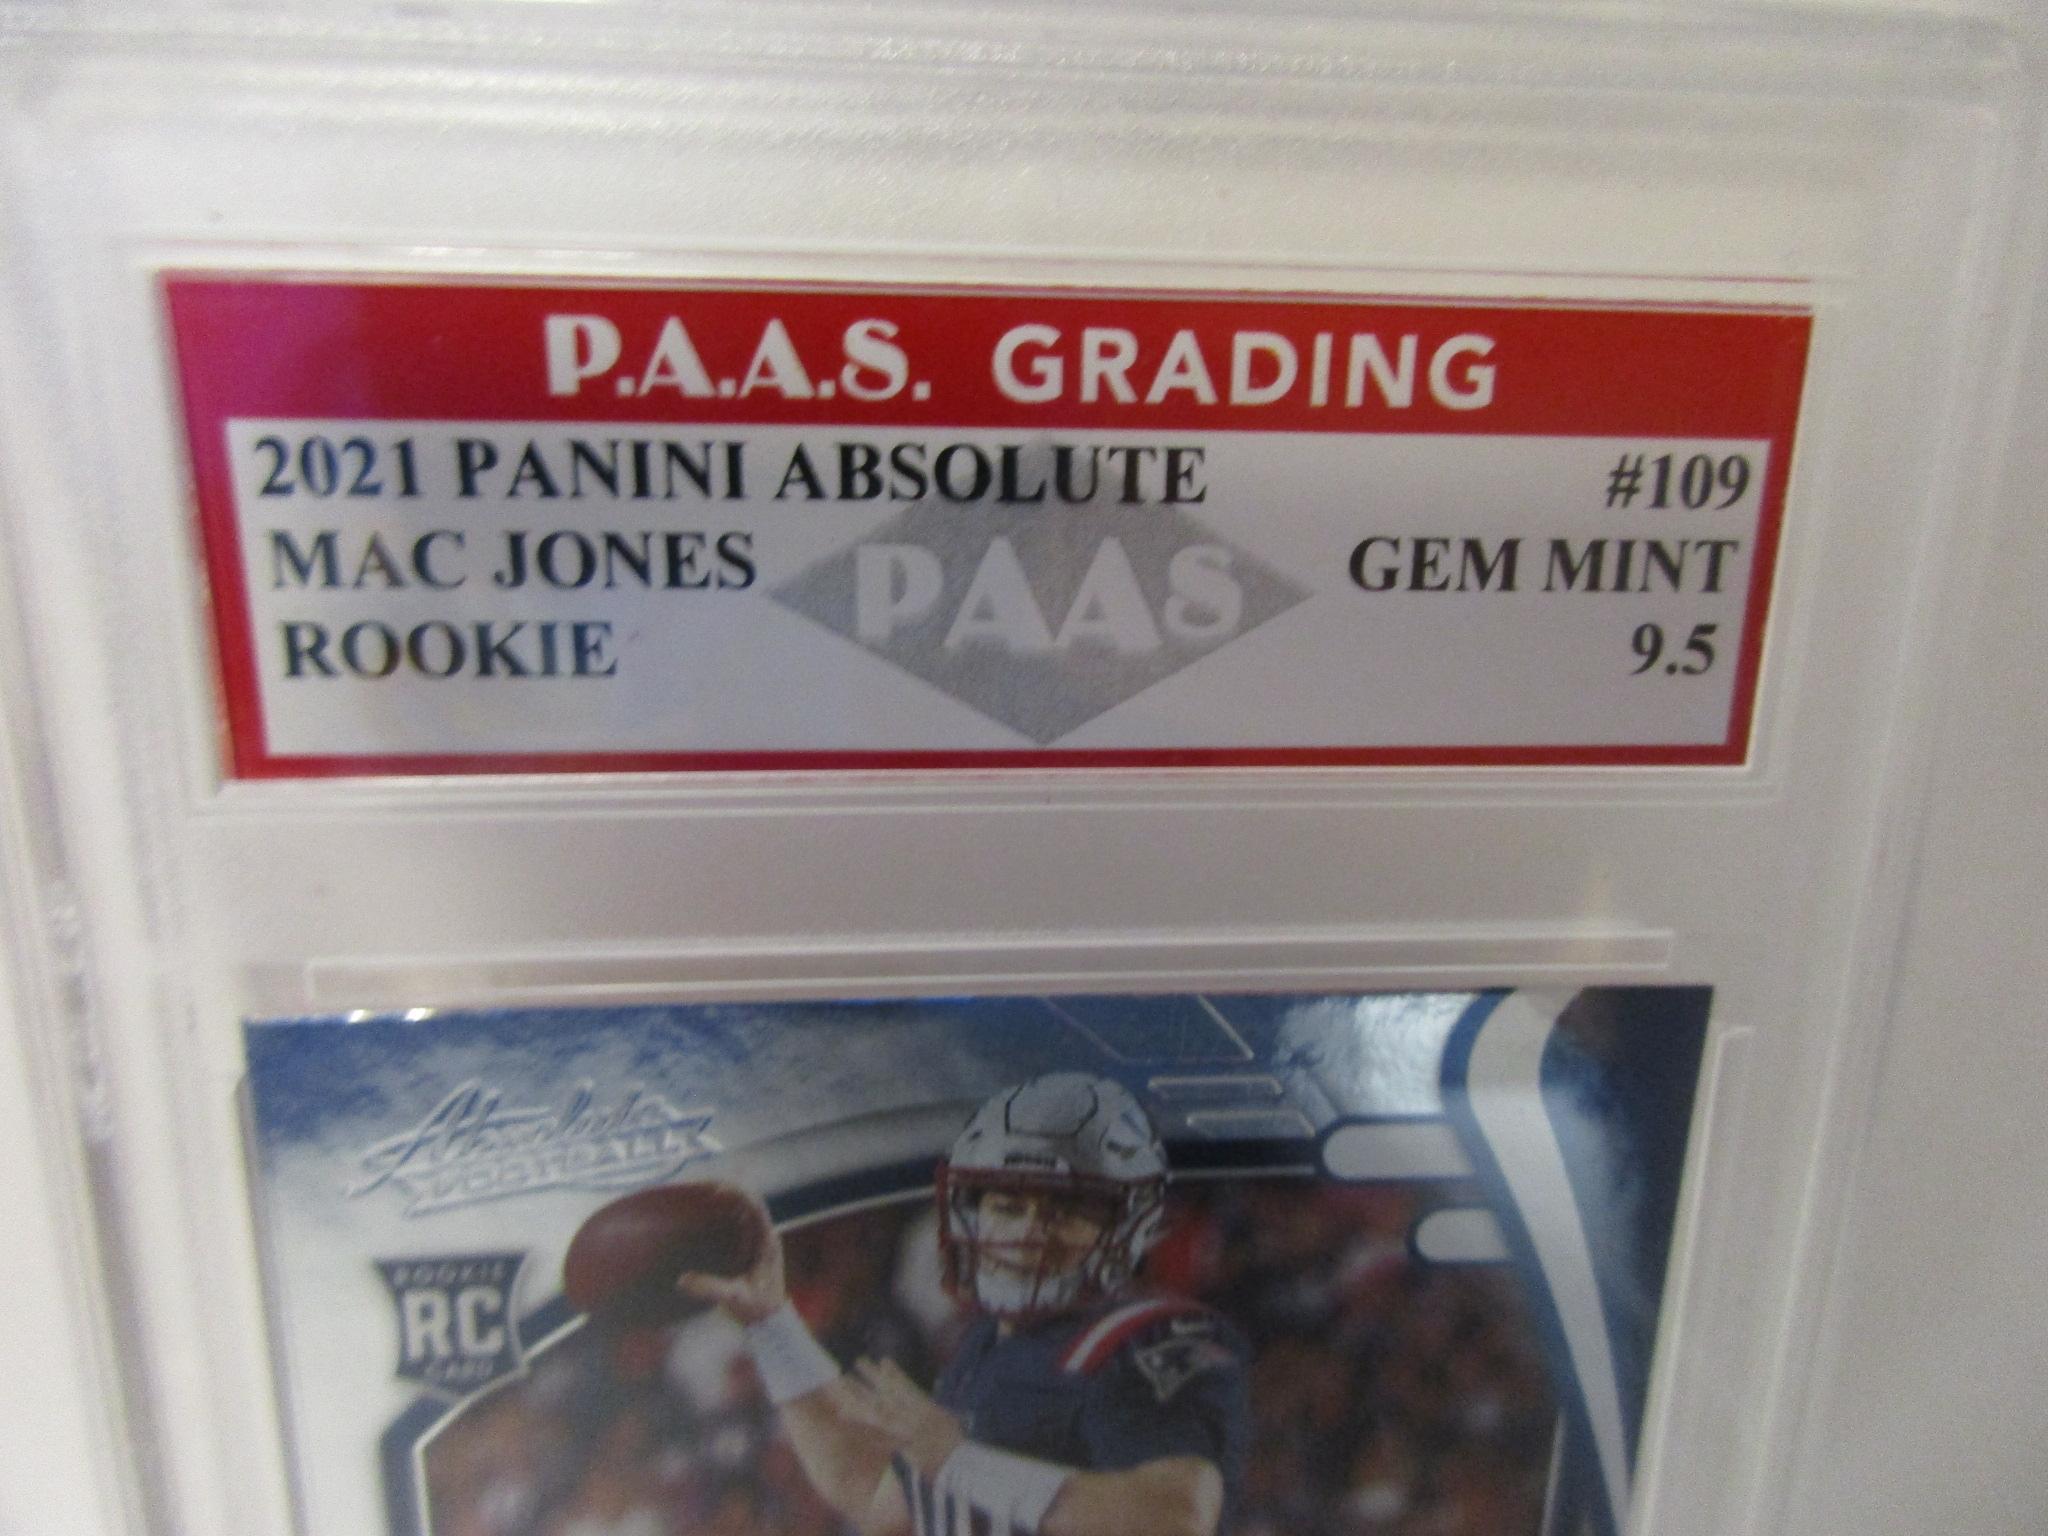 Mac Jones Patriots 2021 Panini Absolute ROOKIE #109 graded PAAS Gem Mint 9.5